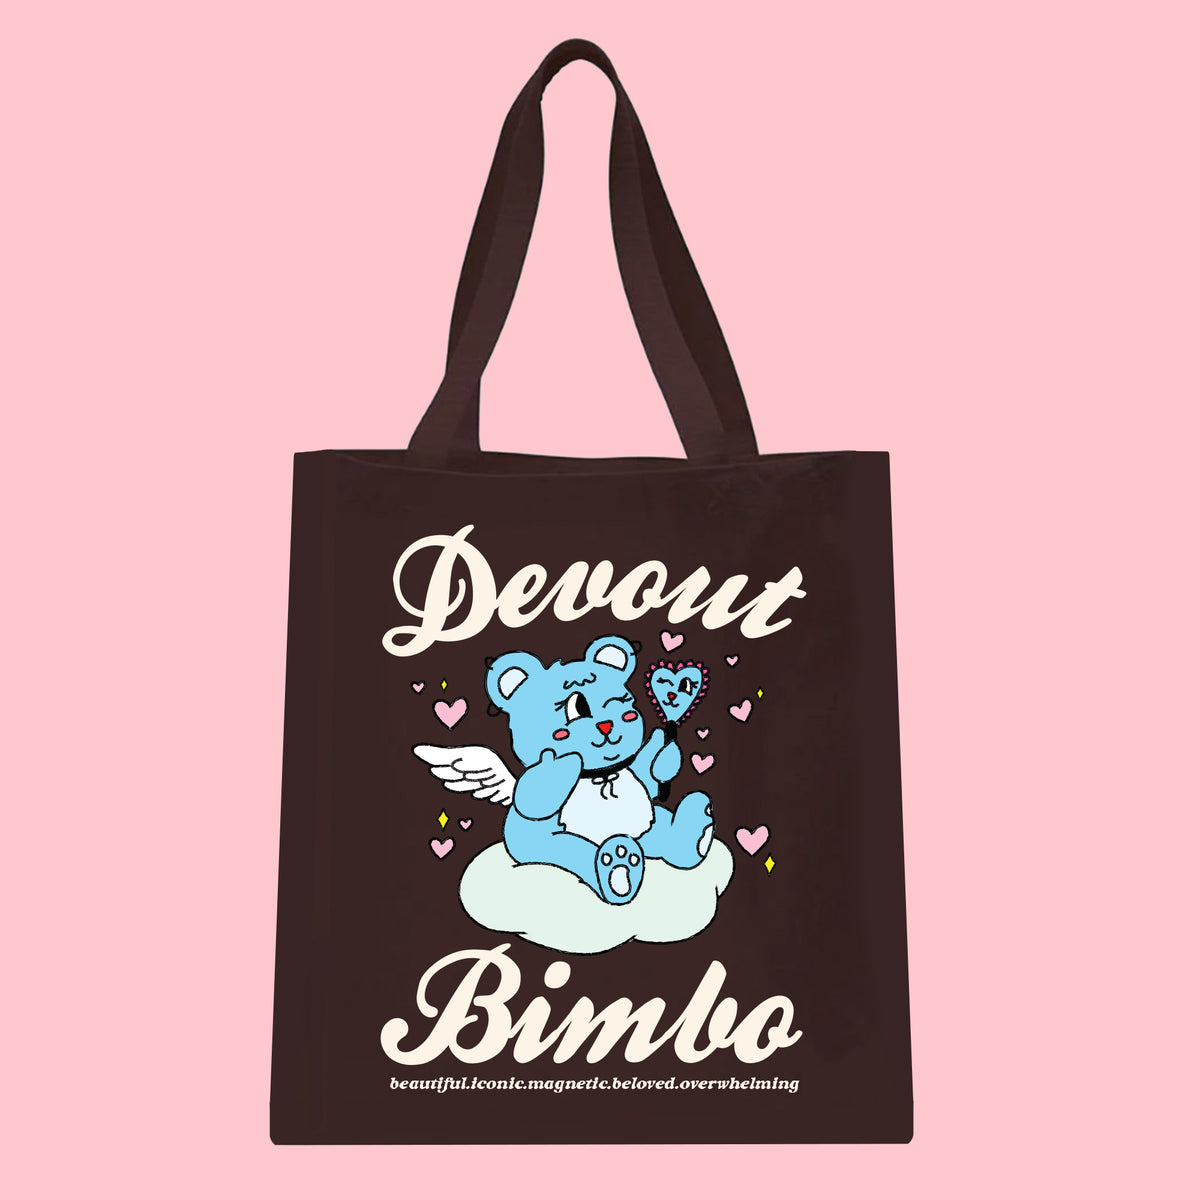 Devout Bimbo Tote Bag | Brown Canvas + Colorful Graphic